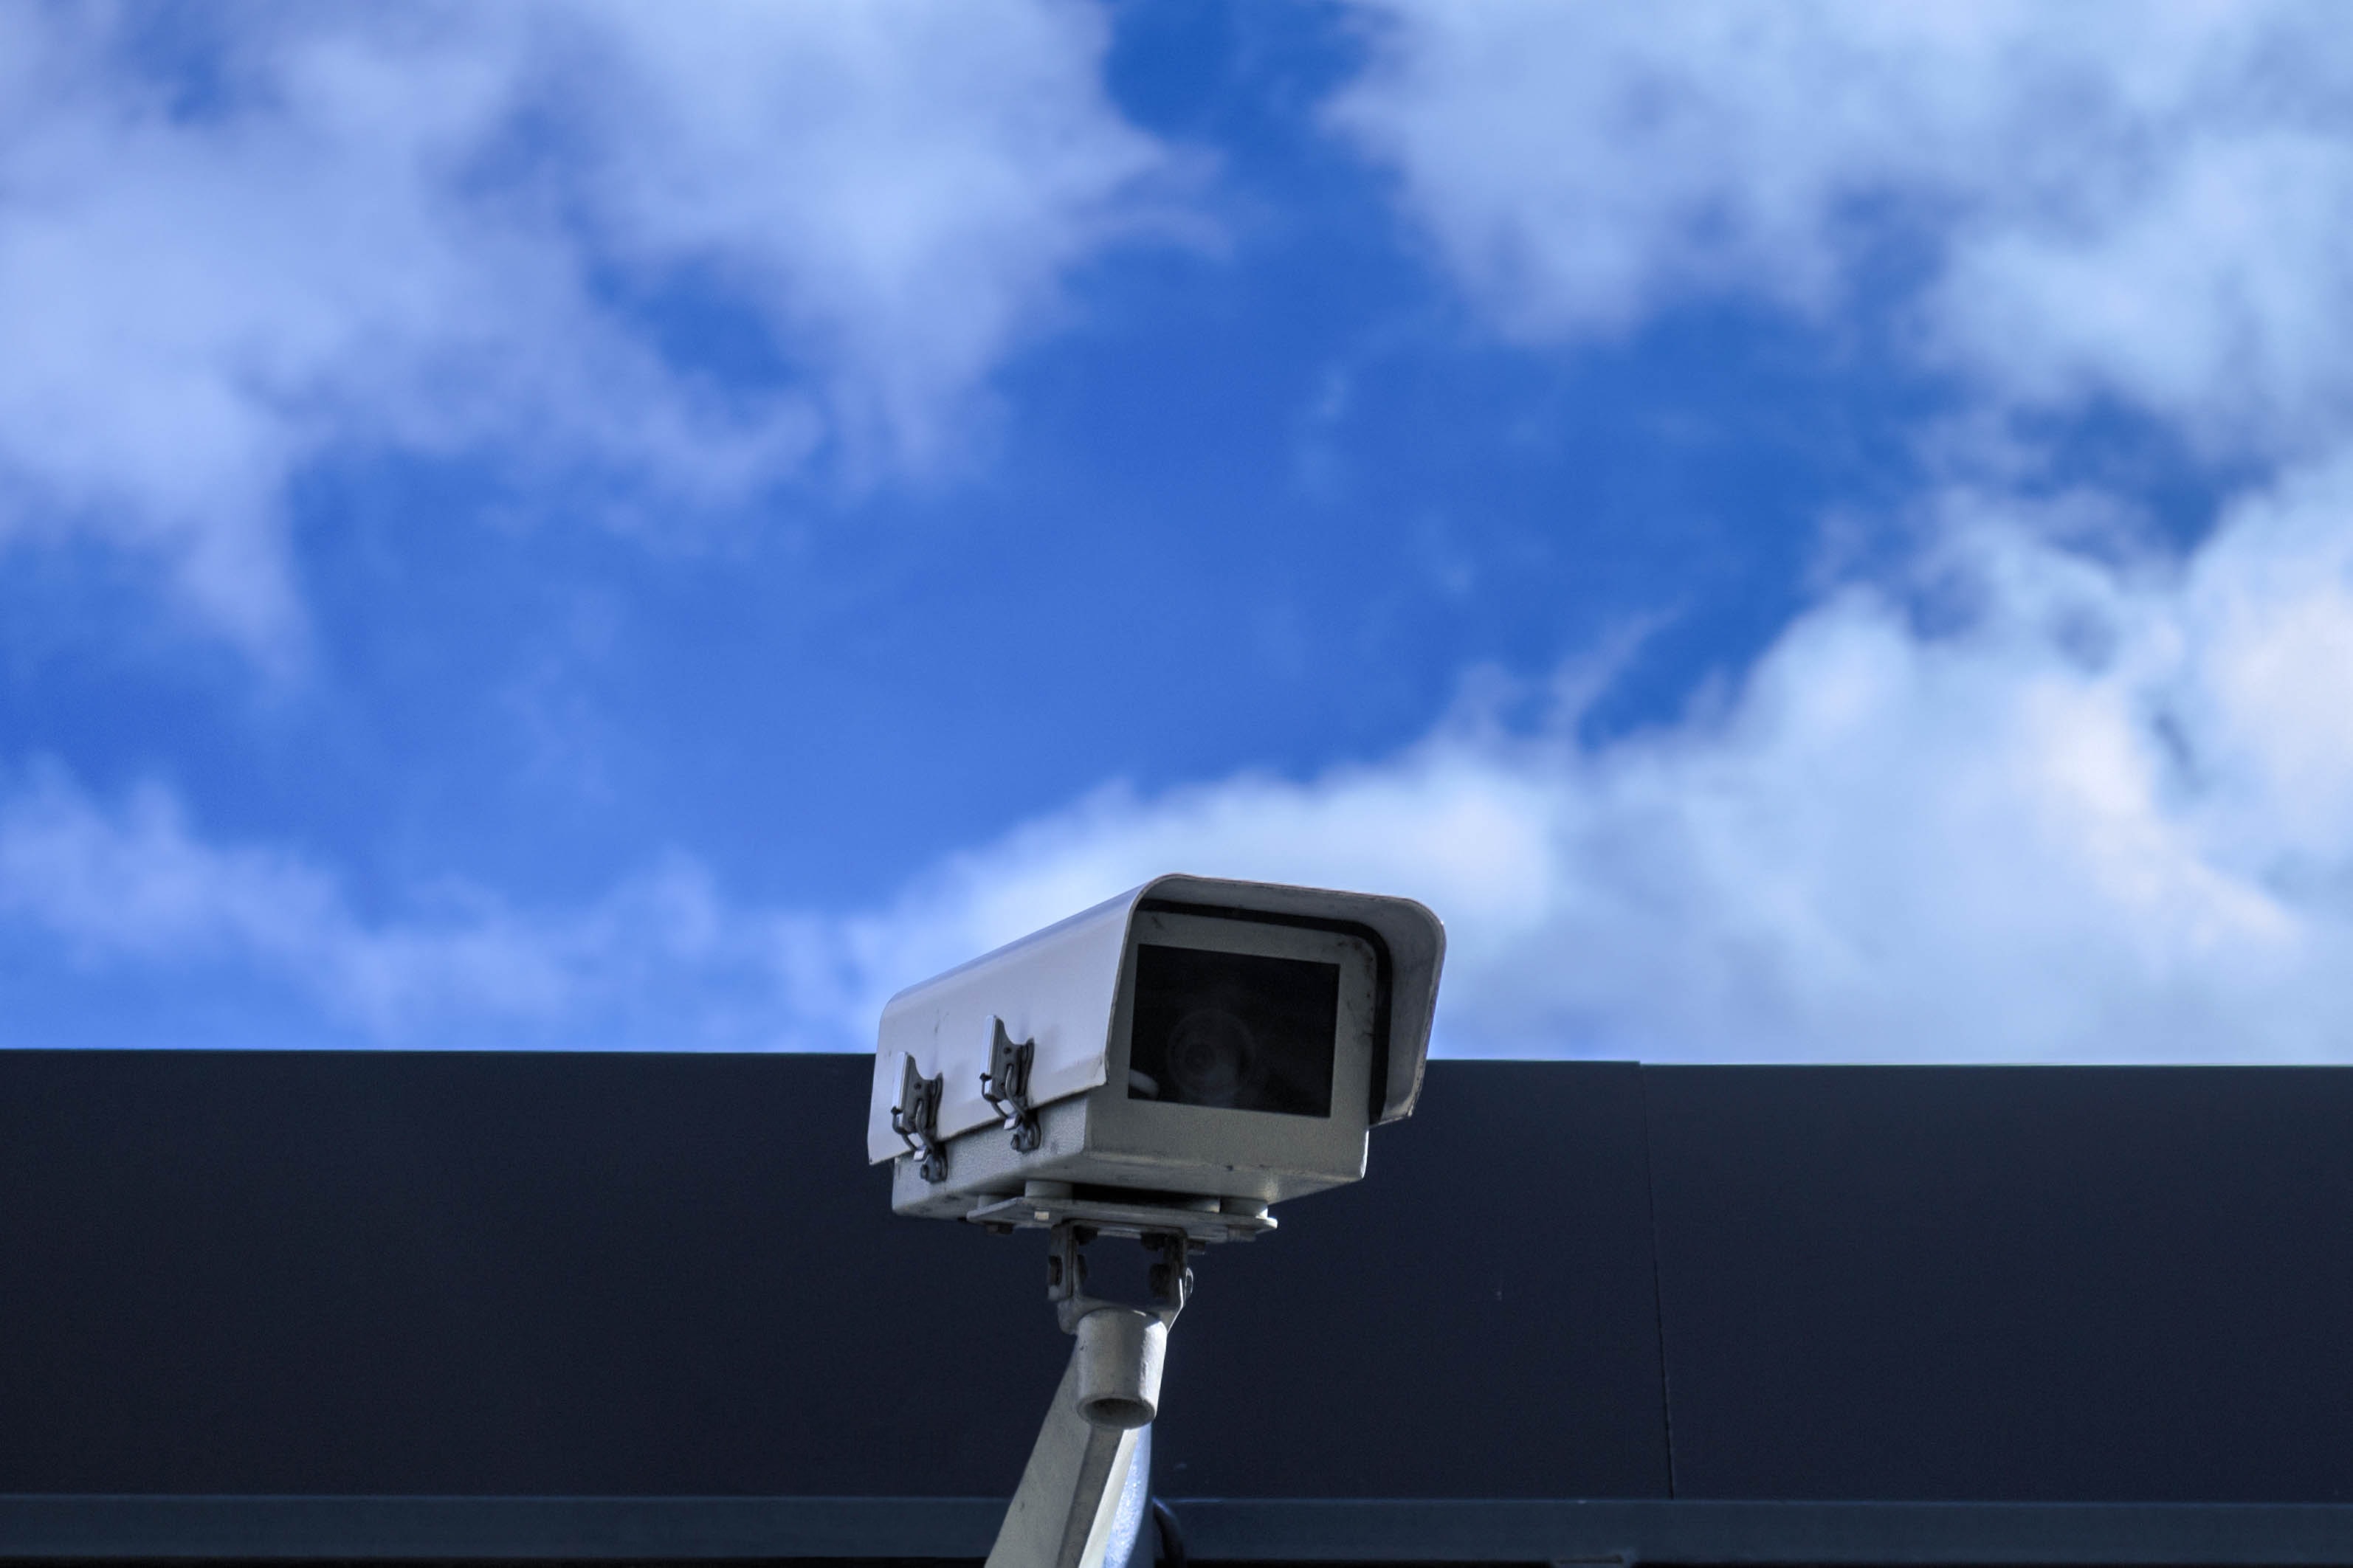  exterior security camera